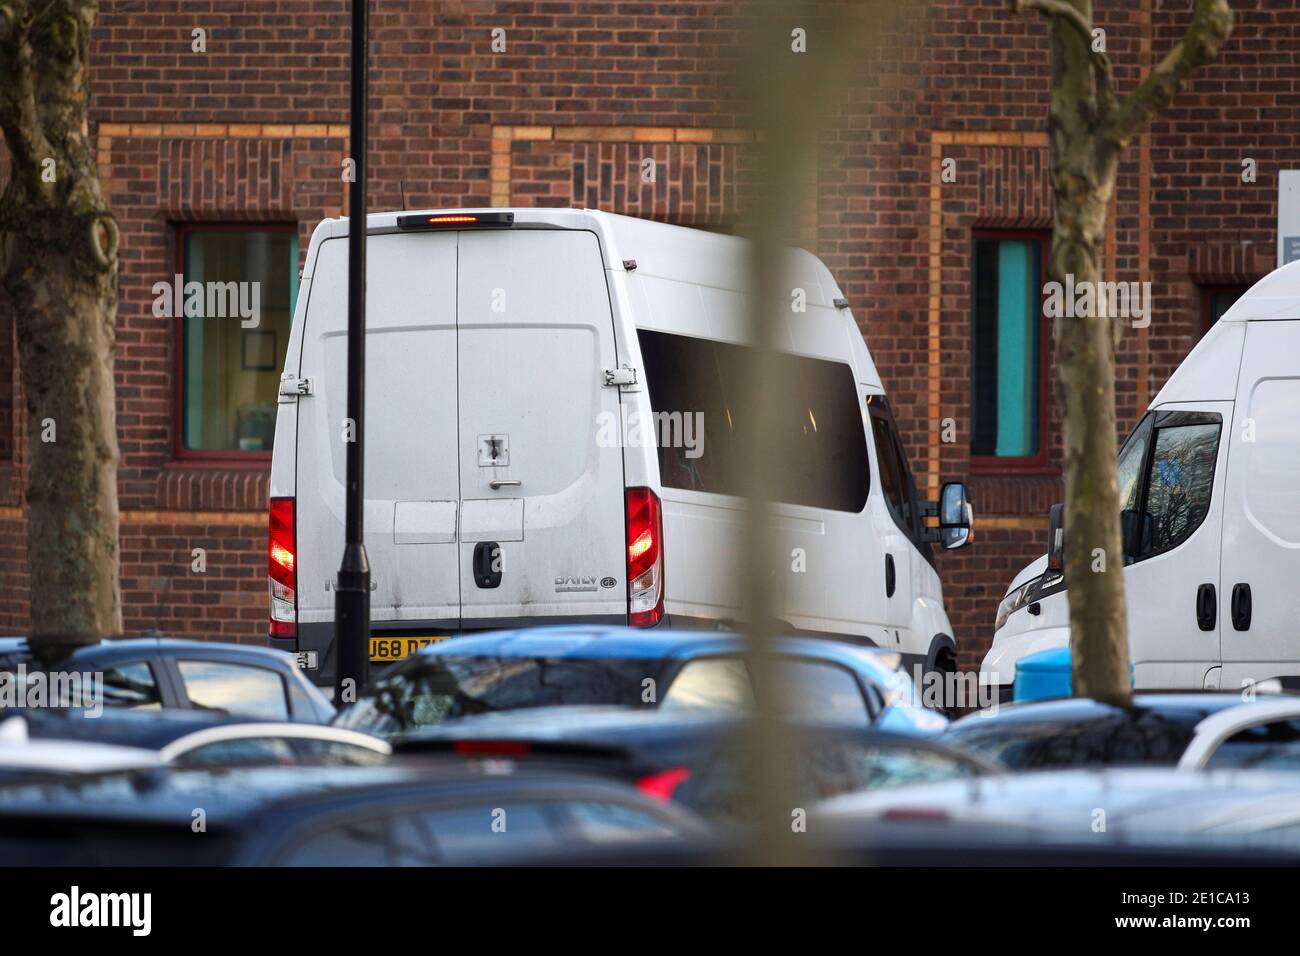 A van is pictured close HMP Belmarsh prison where WikiLeaks founder Julian Assange is held, in London, Britain, January 6, 2021. REUTERS/Tom Nicholson Stock Photo